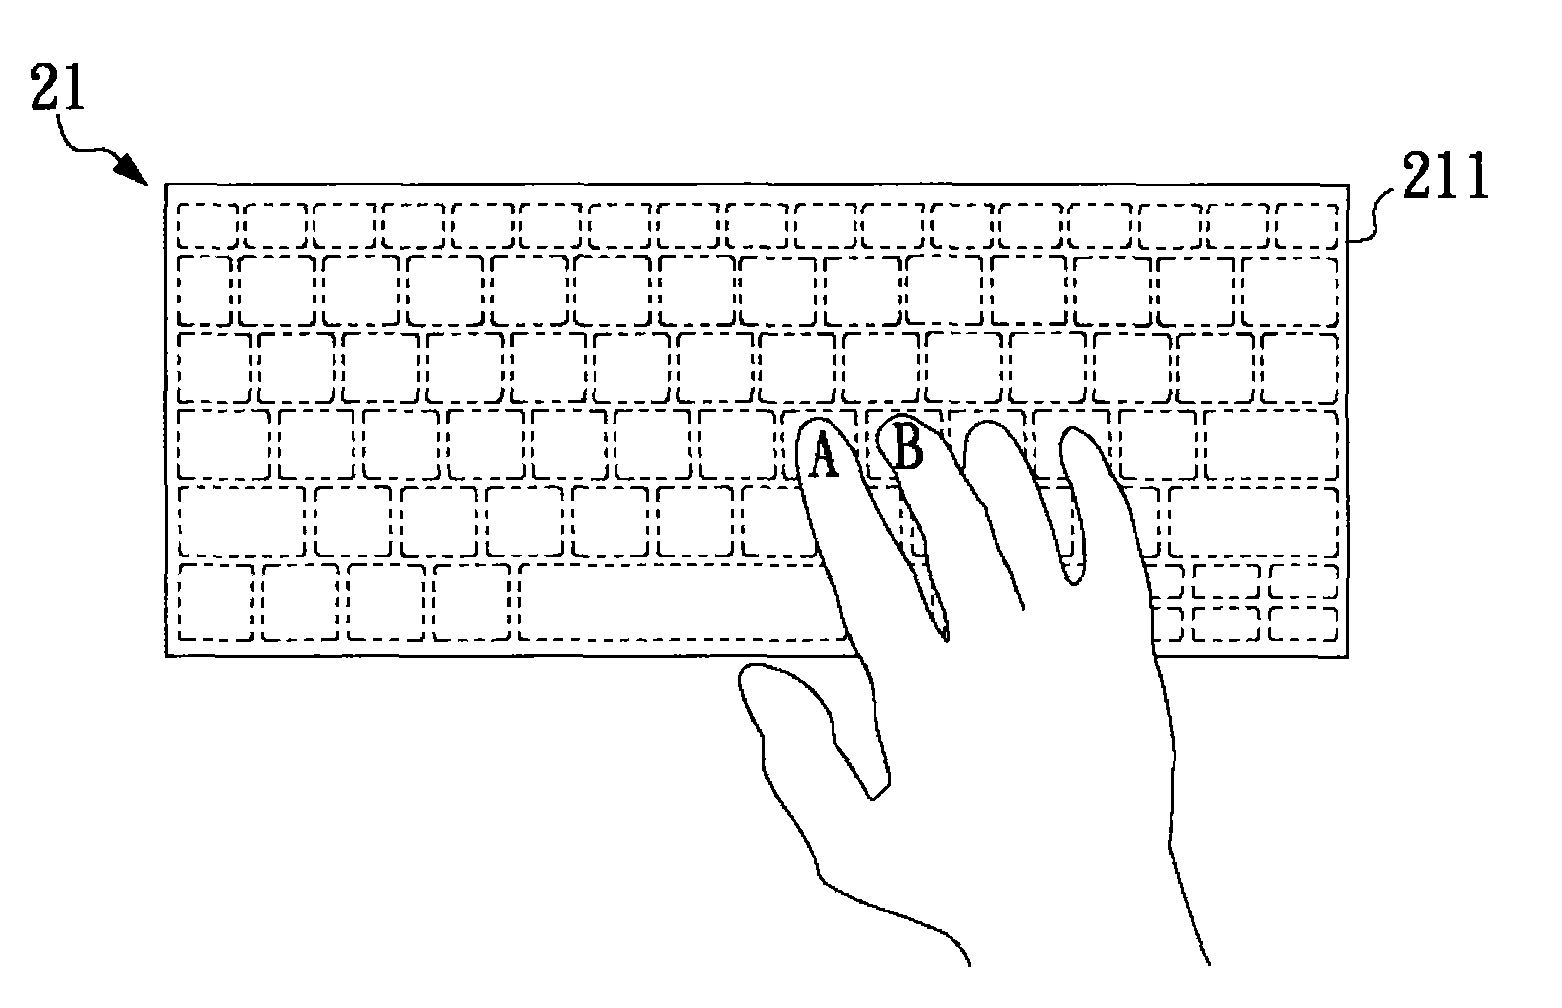 Method for adjusting display appearance of keyboard interface